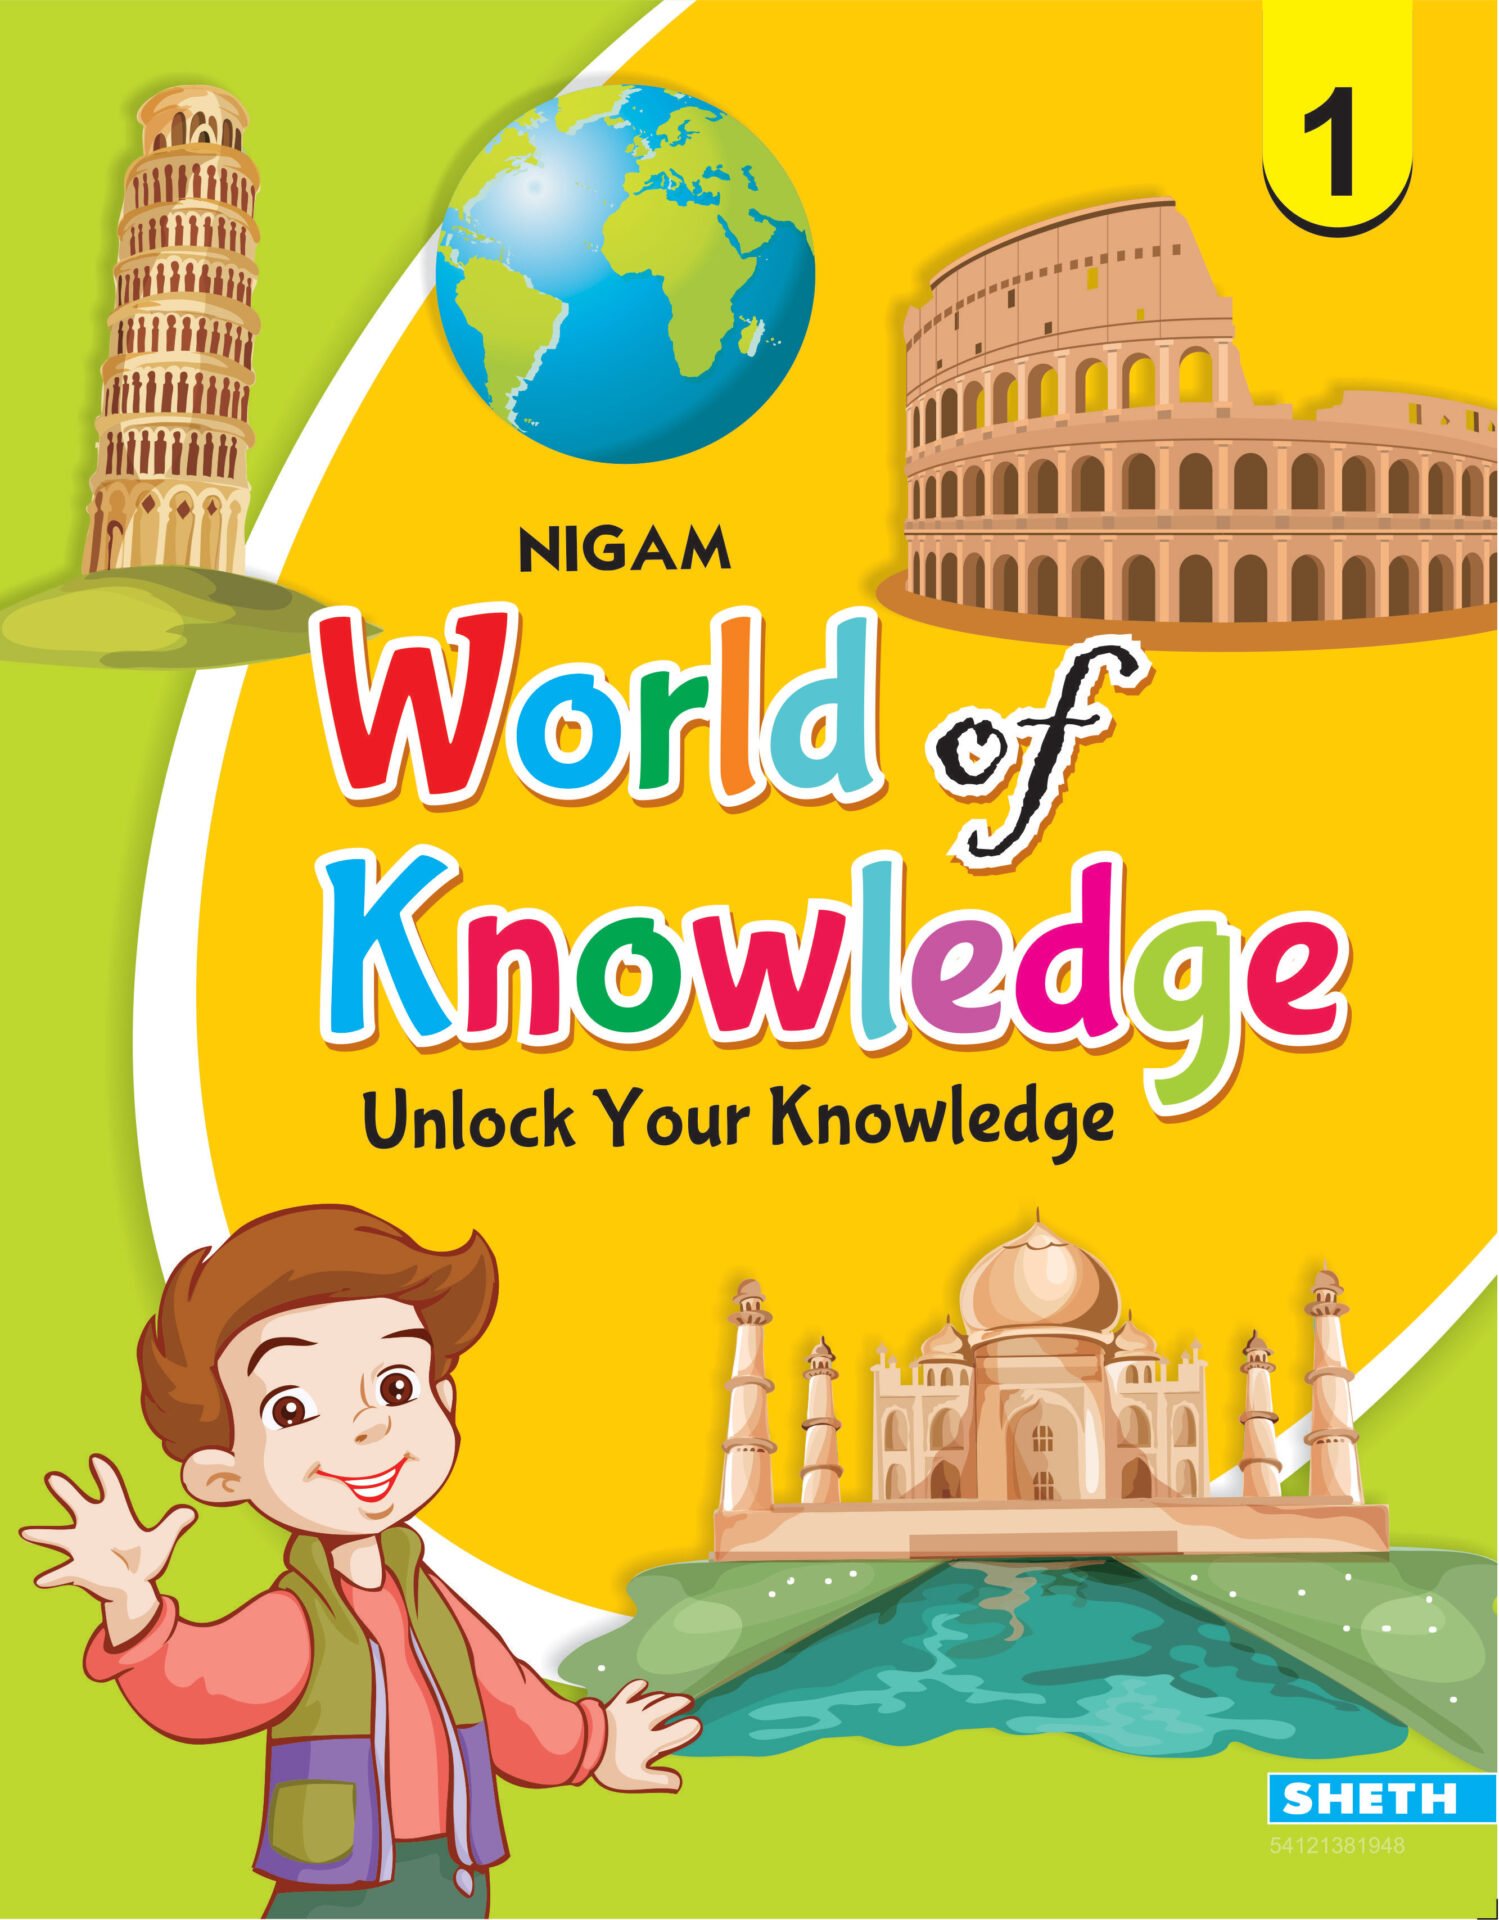 Nigam World of Knowledge 1 1 1